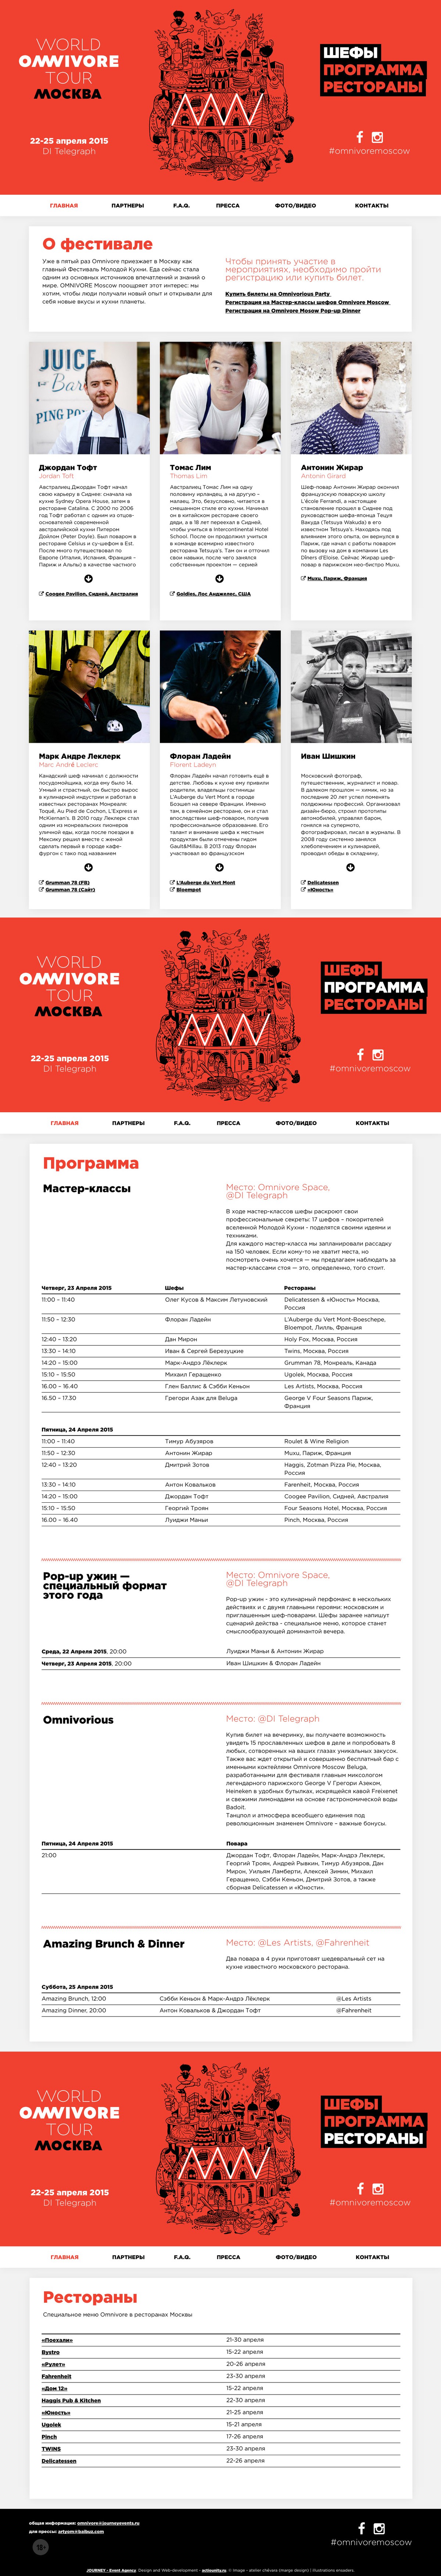 Сайт мероприятия OMNIVORE MOSCOW 2015